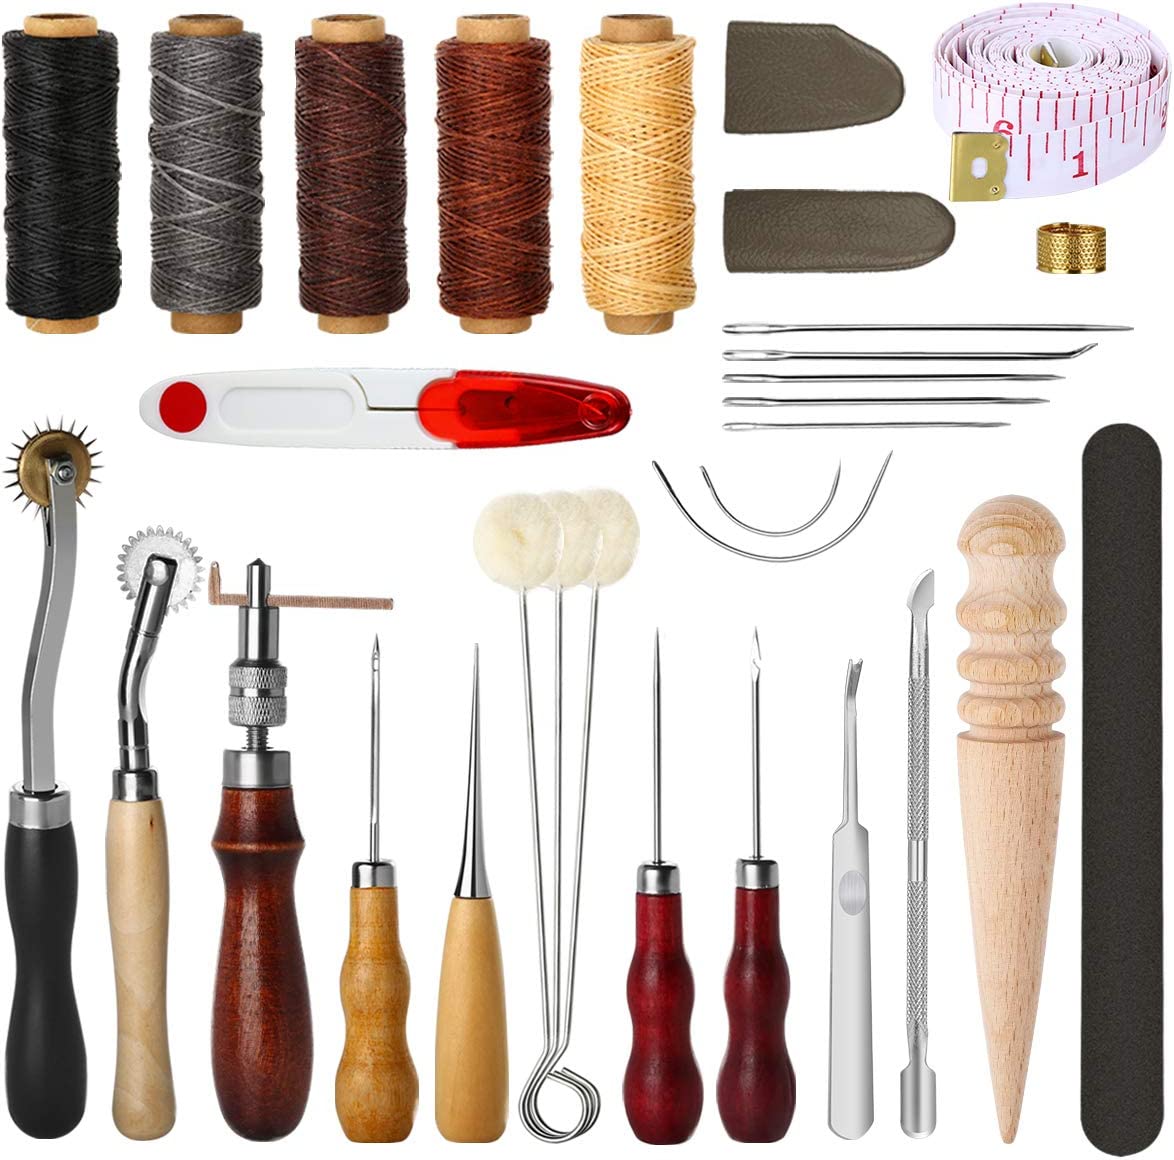 7 Pcs Leather Tools DIY Hand Stitching Kit Waxed Thread Cords, Stitching  Awl, Thread Unpicker, Sewing Thimble, Scissors. 